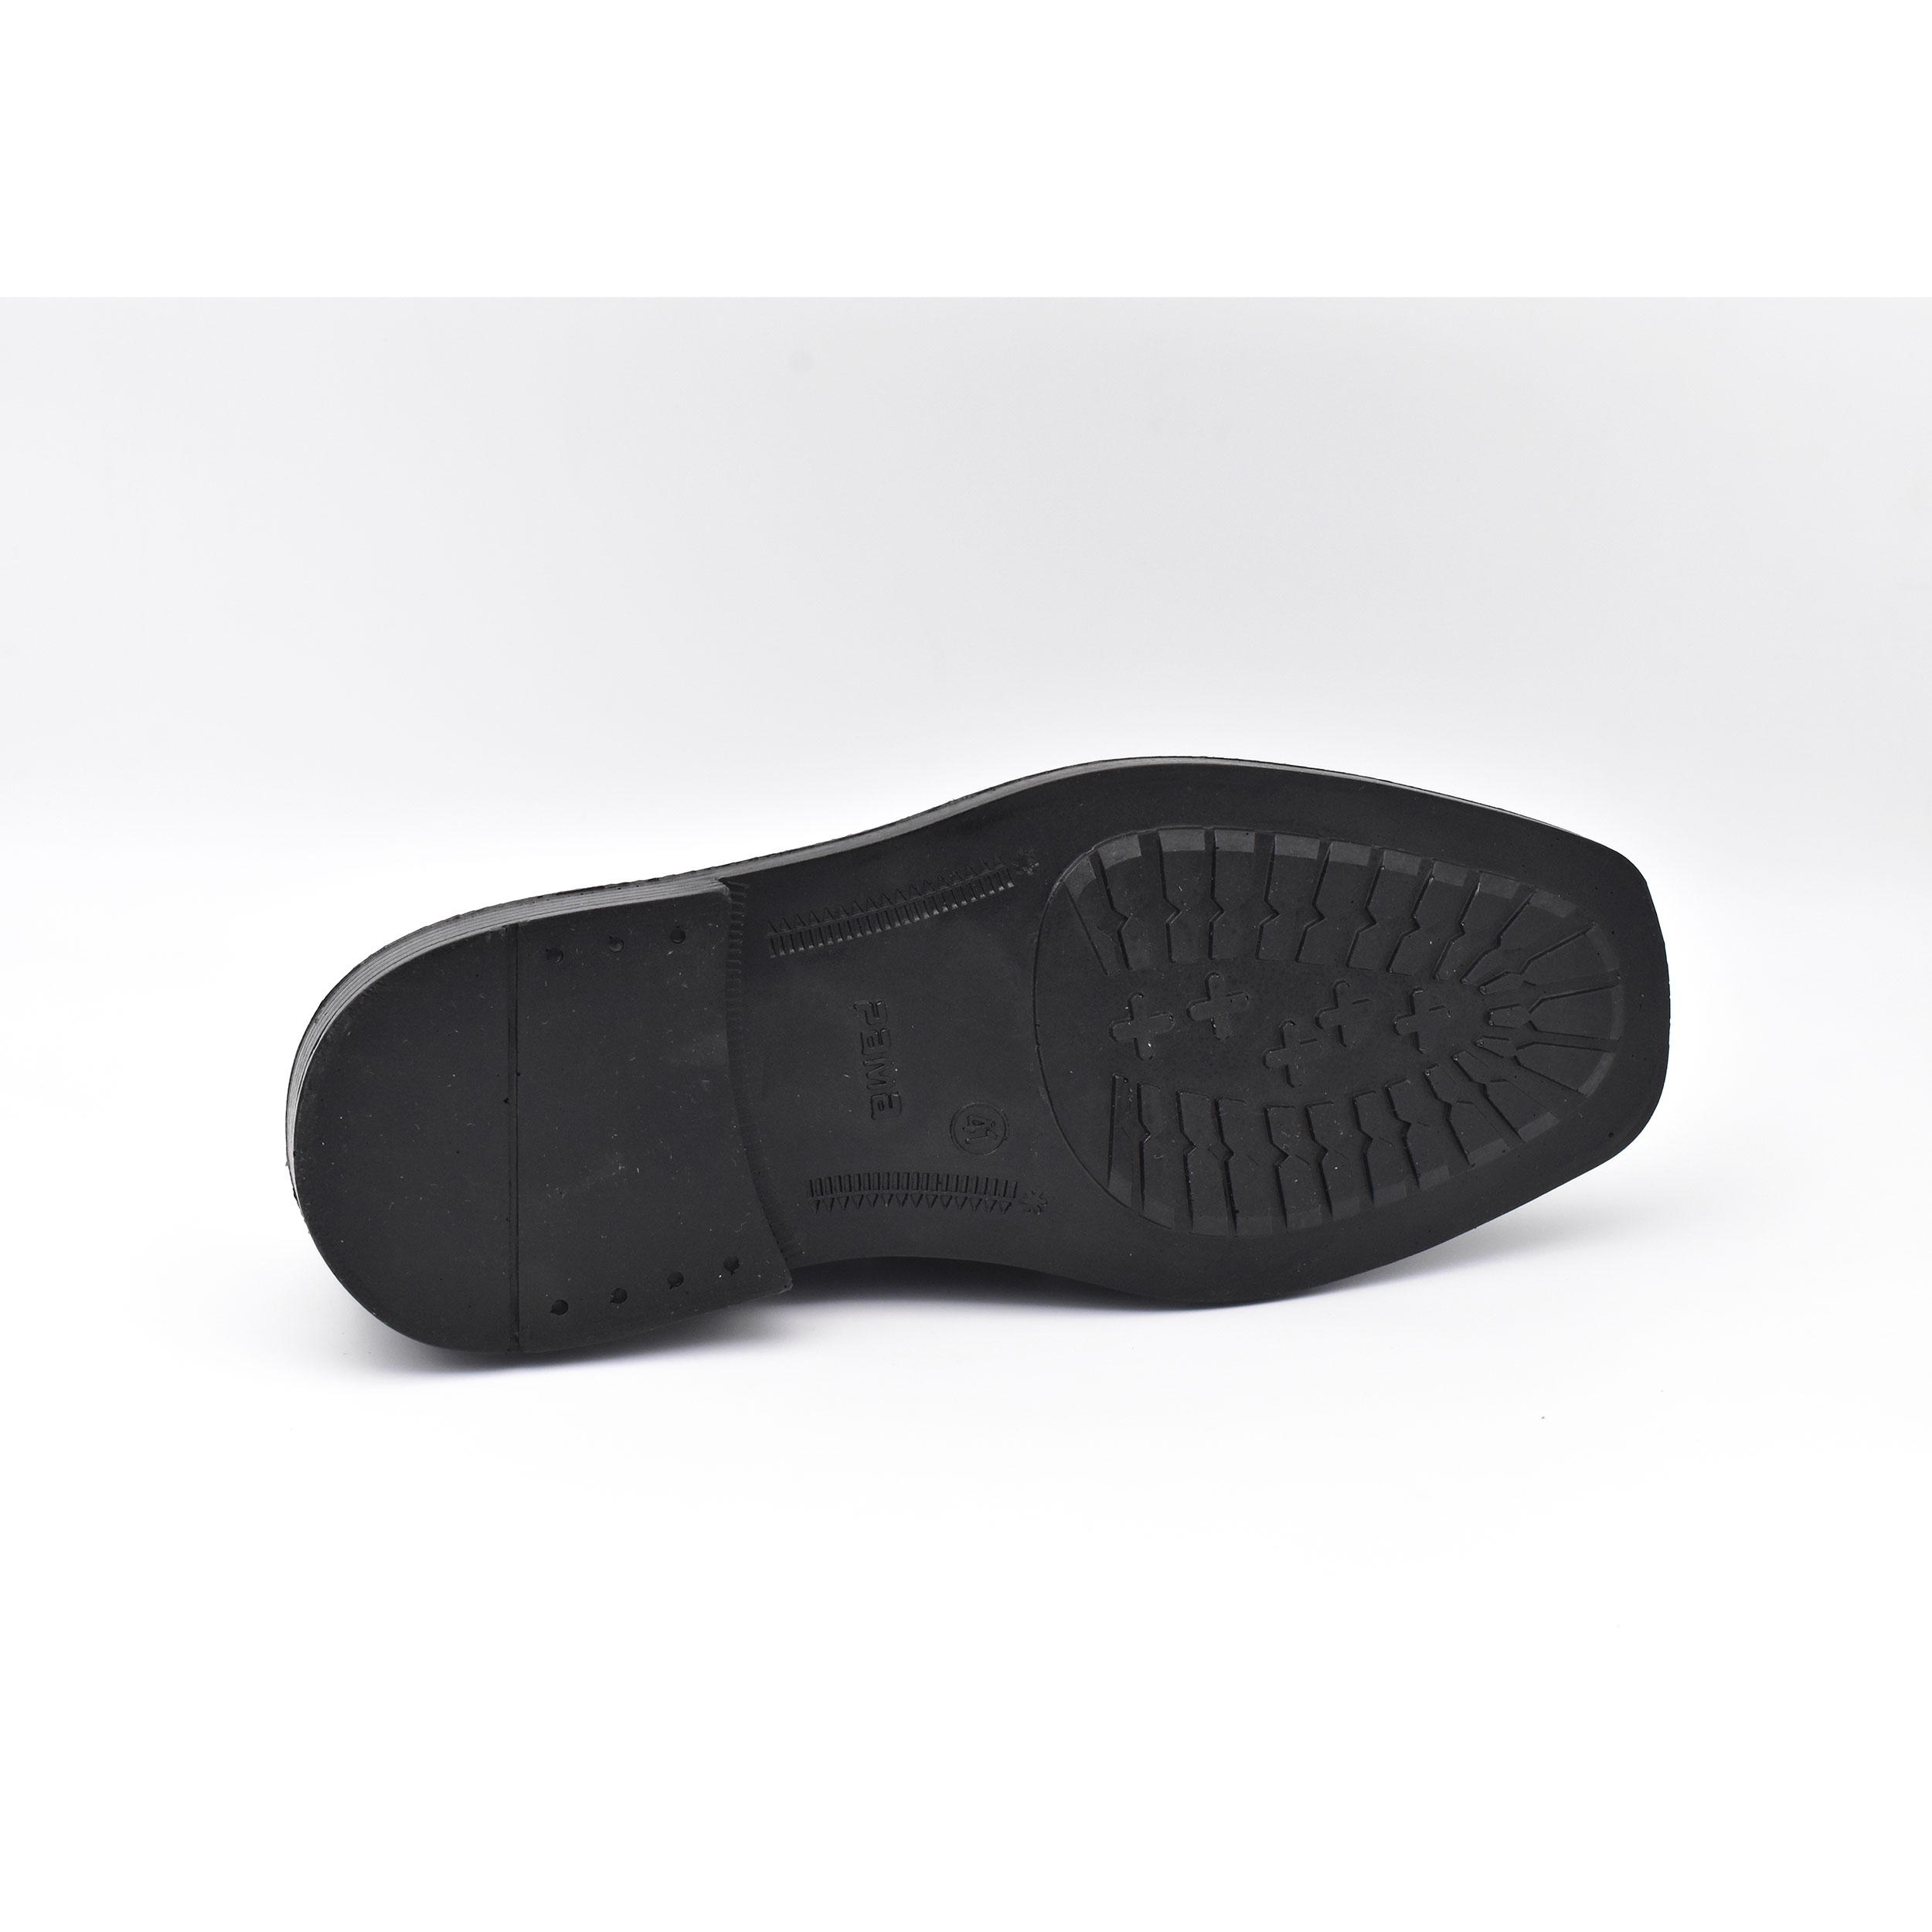 کفش مردانه پاما مدل Oscar کد G1189 -  - 9